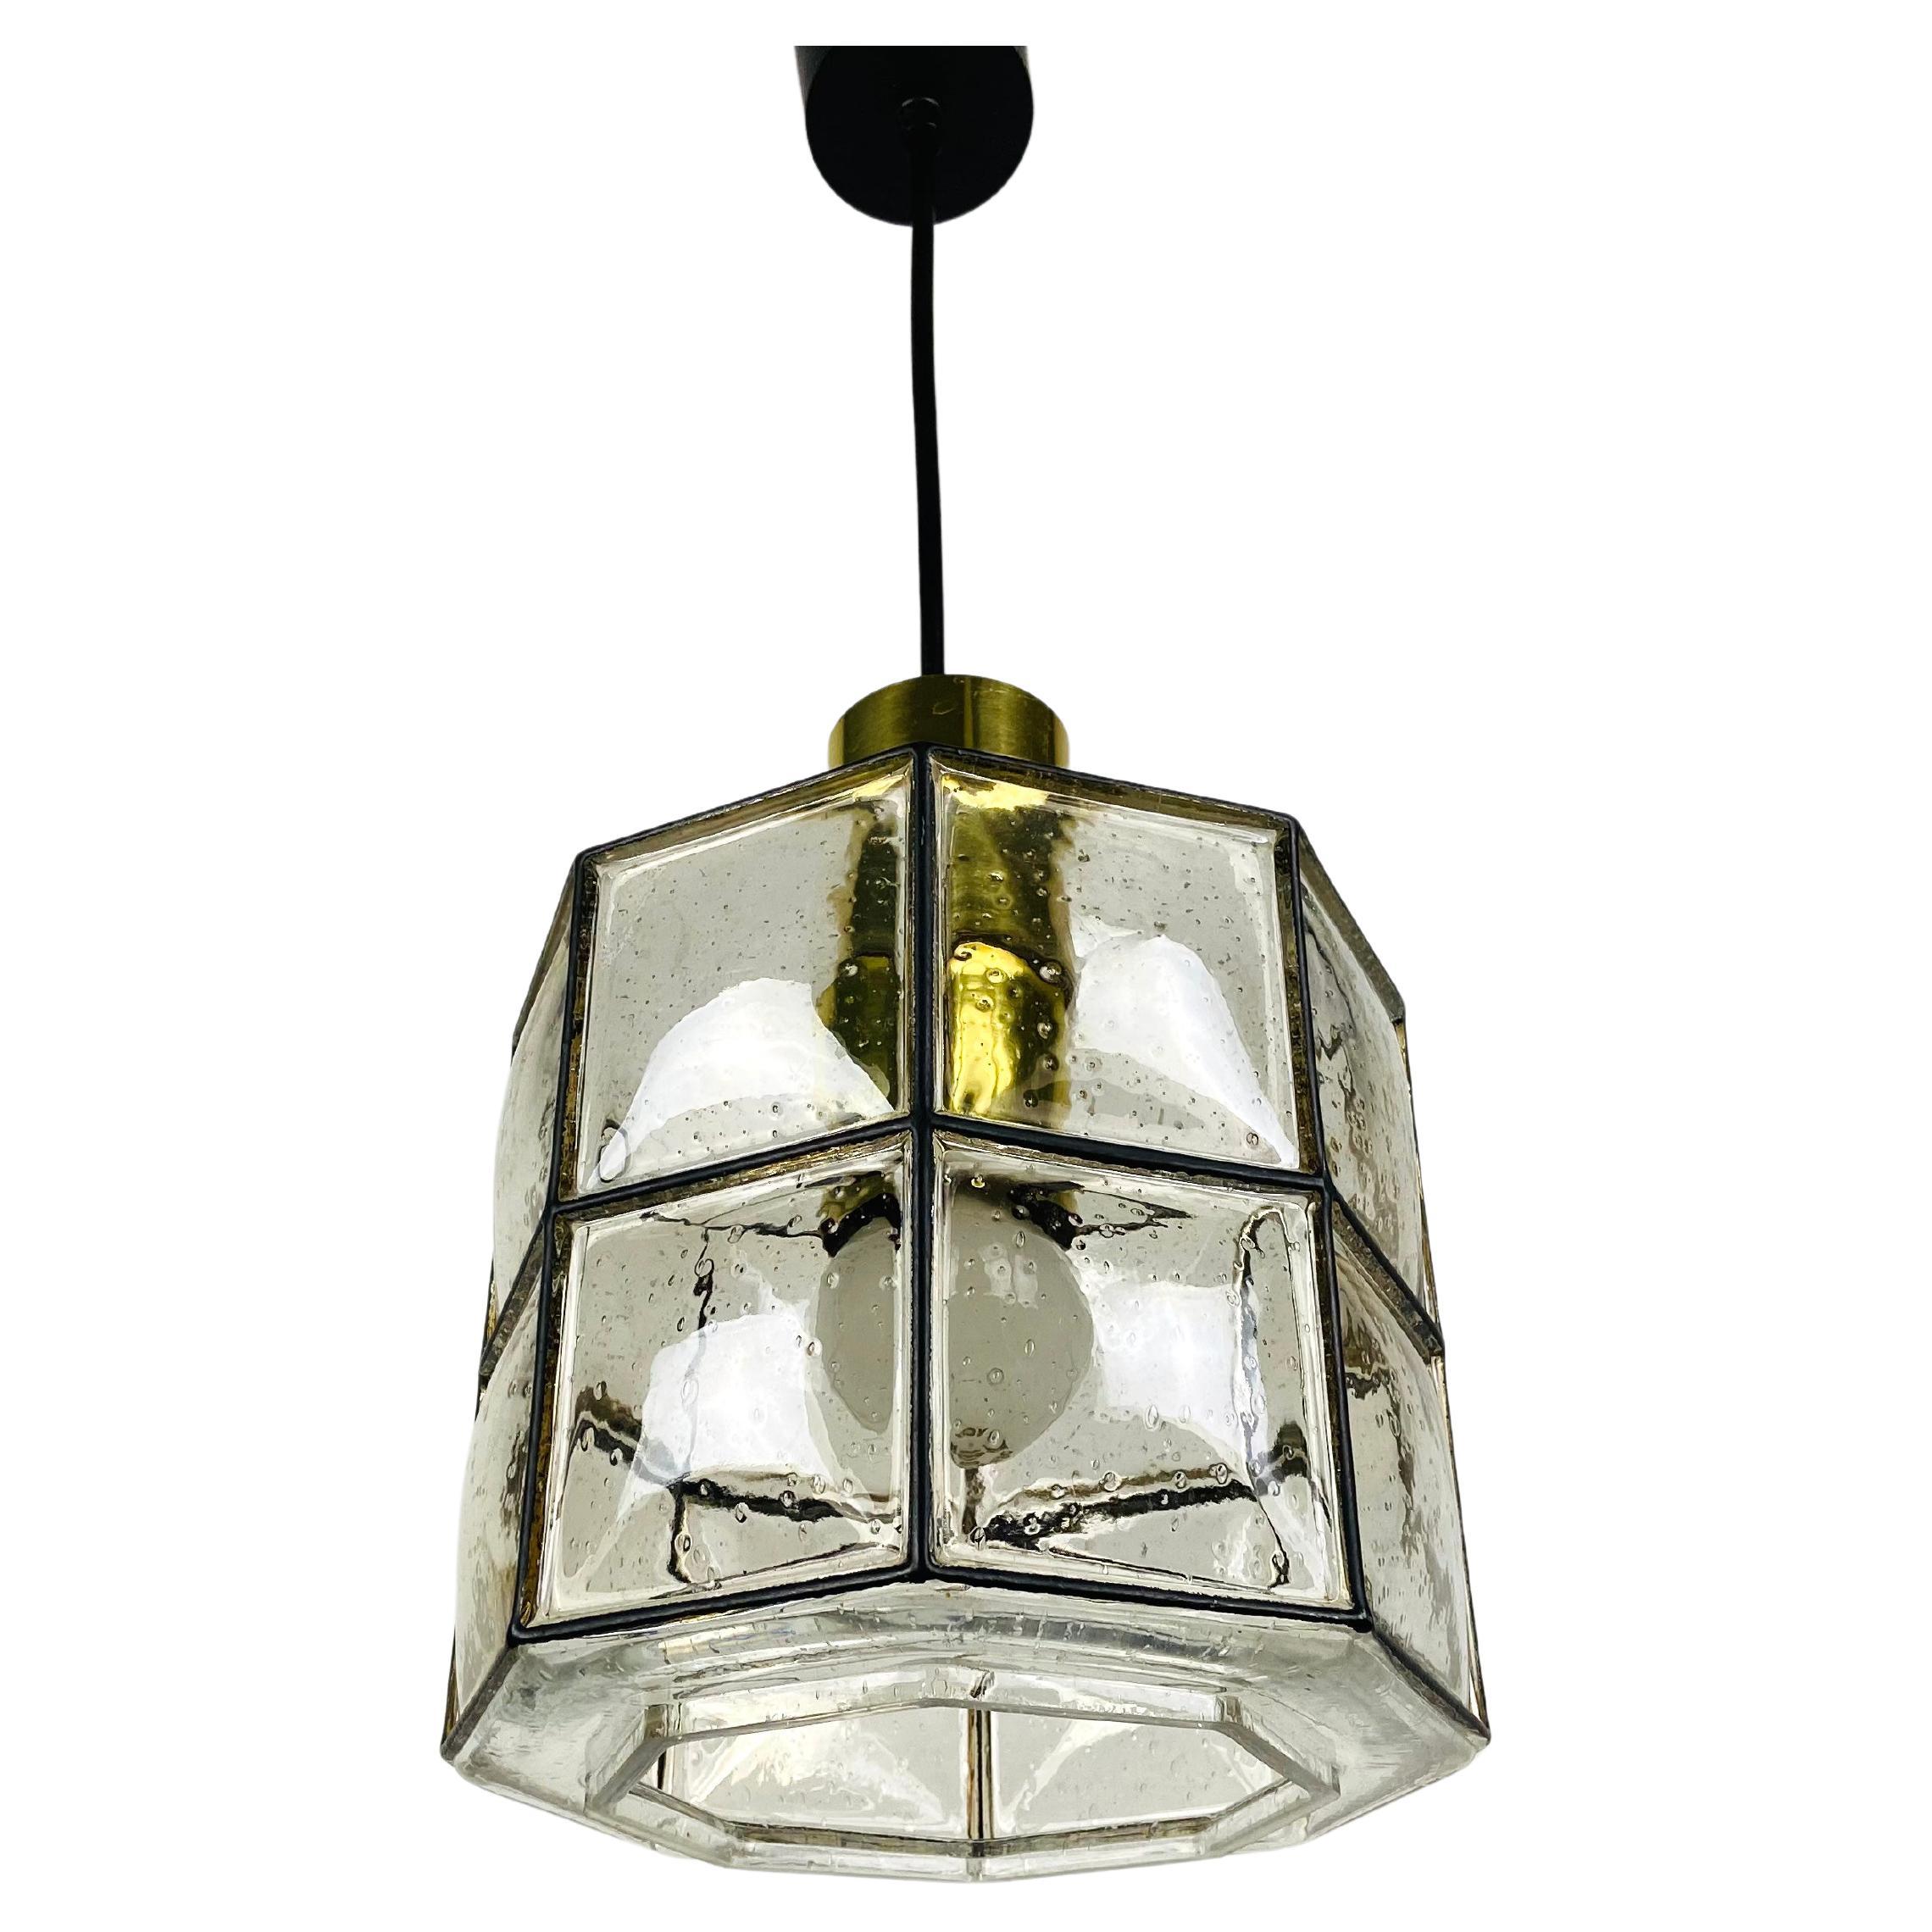 Midcentury Iron and Bubble Glass Pendant Lamp by Glashütte Limburg, 1960s